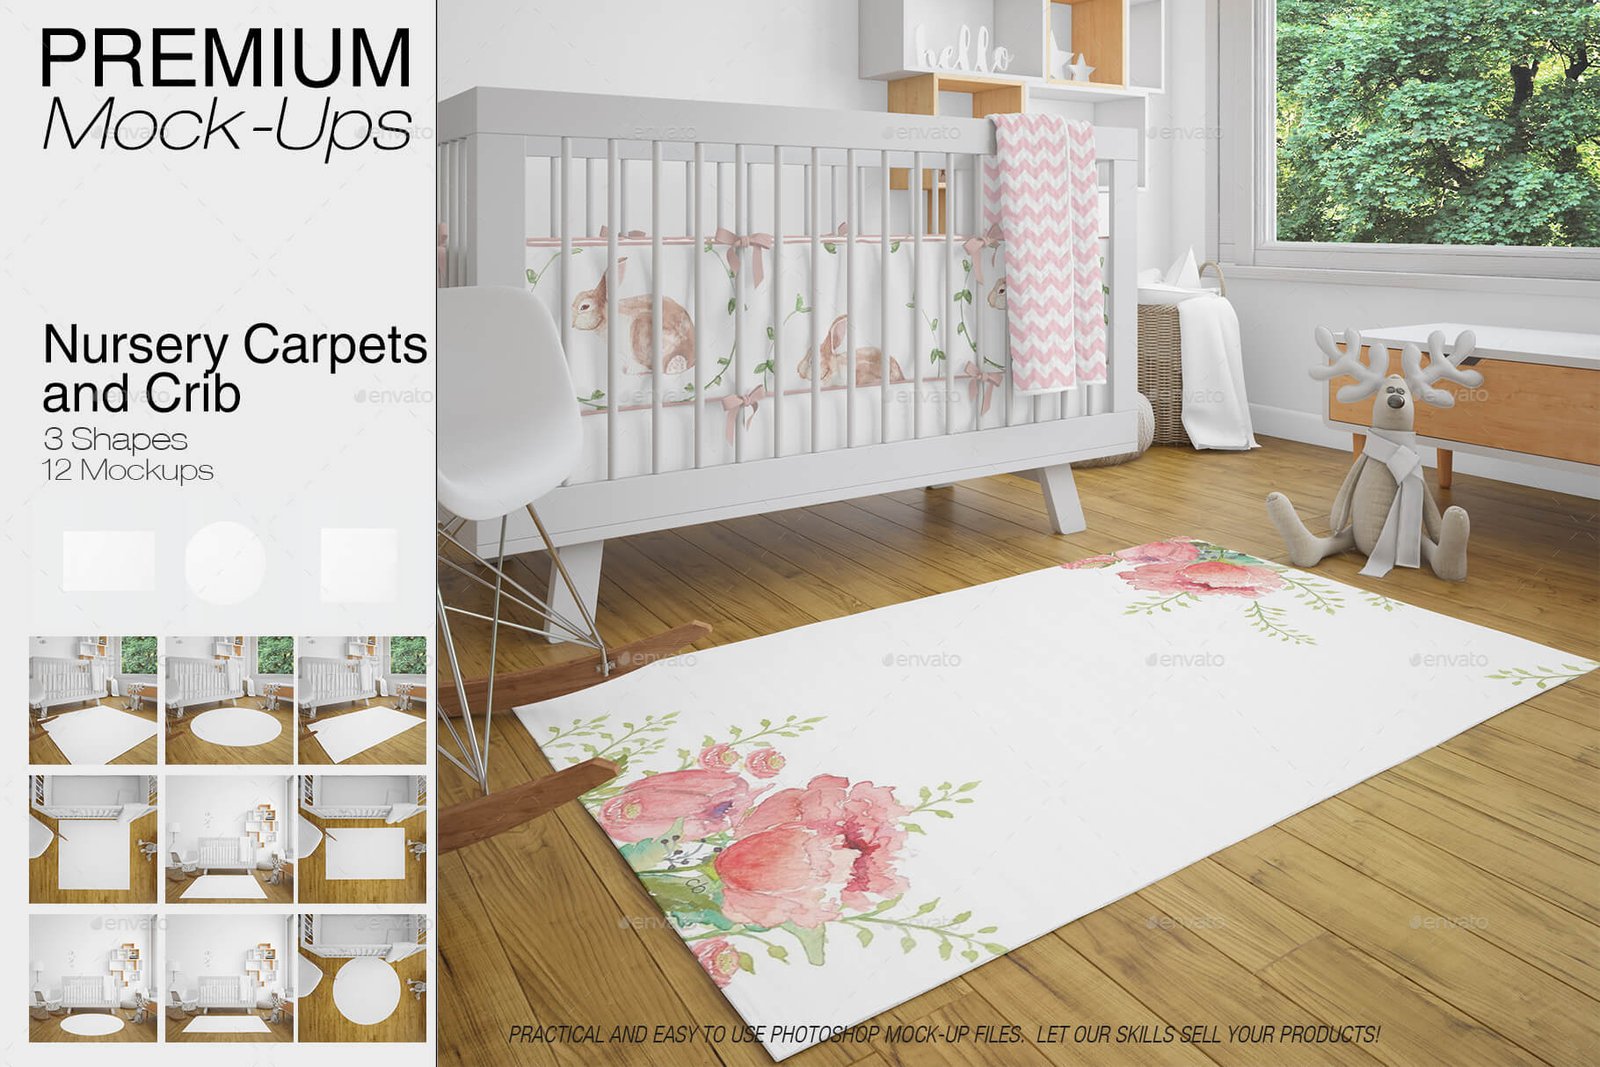 Download 17+ Stunning Free Carpet Mockup PSD Templates - Mockup Den